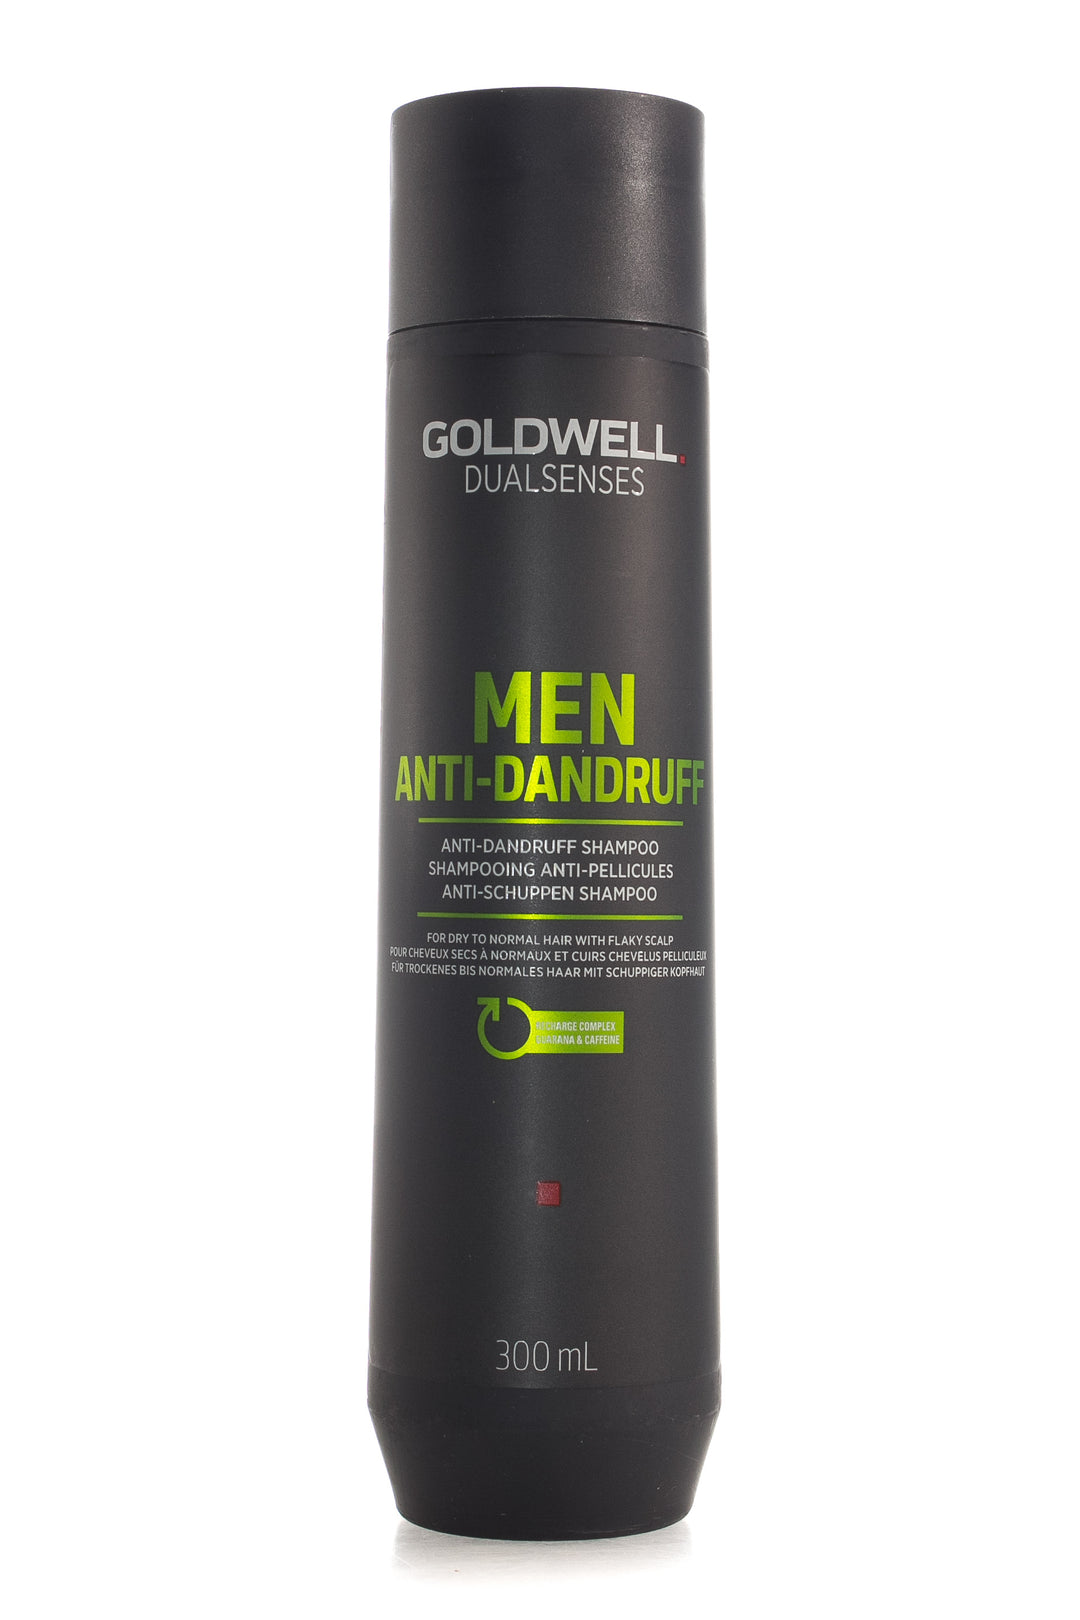 Product Image: Goldwell Dualsenses Men Anti-Dandruff Shampoo - 300ml